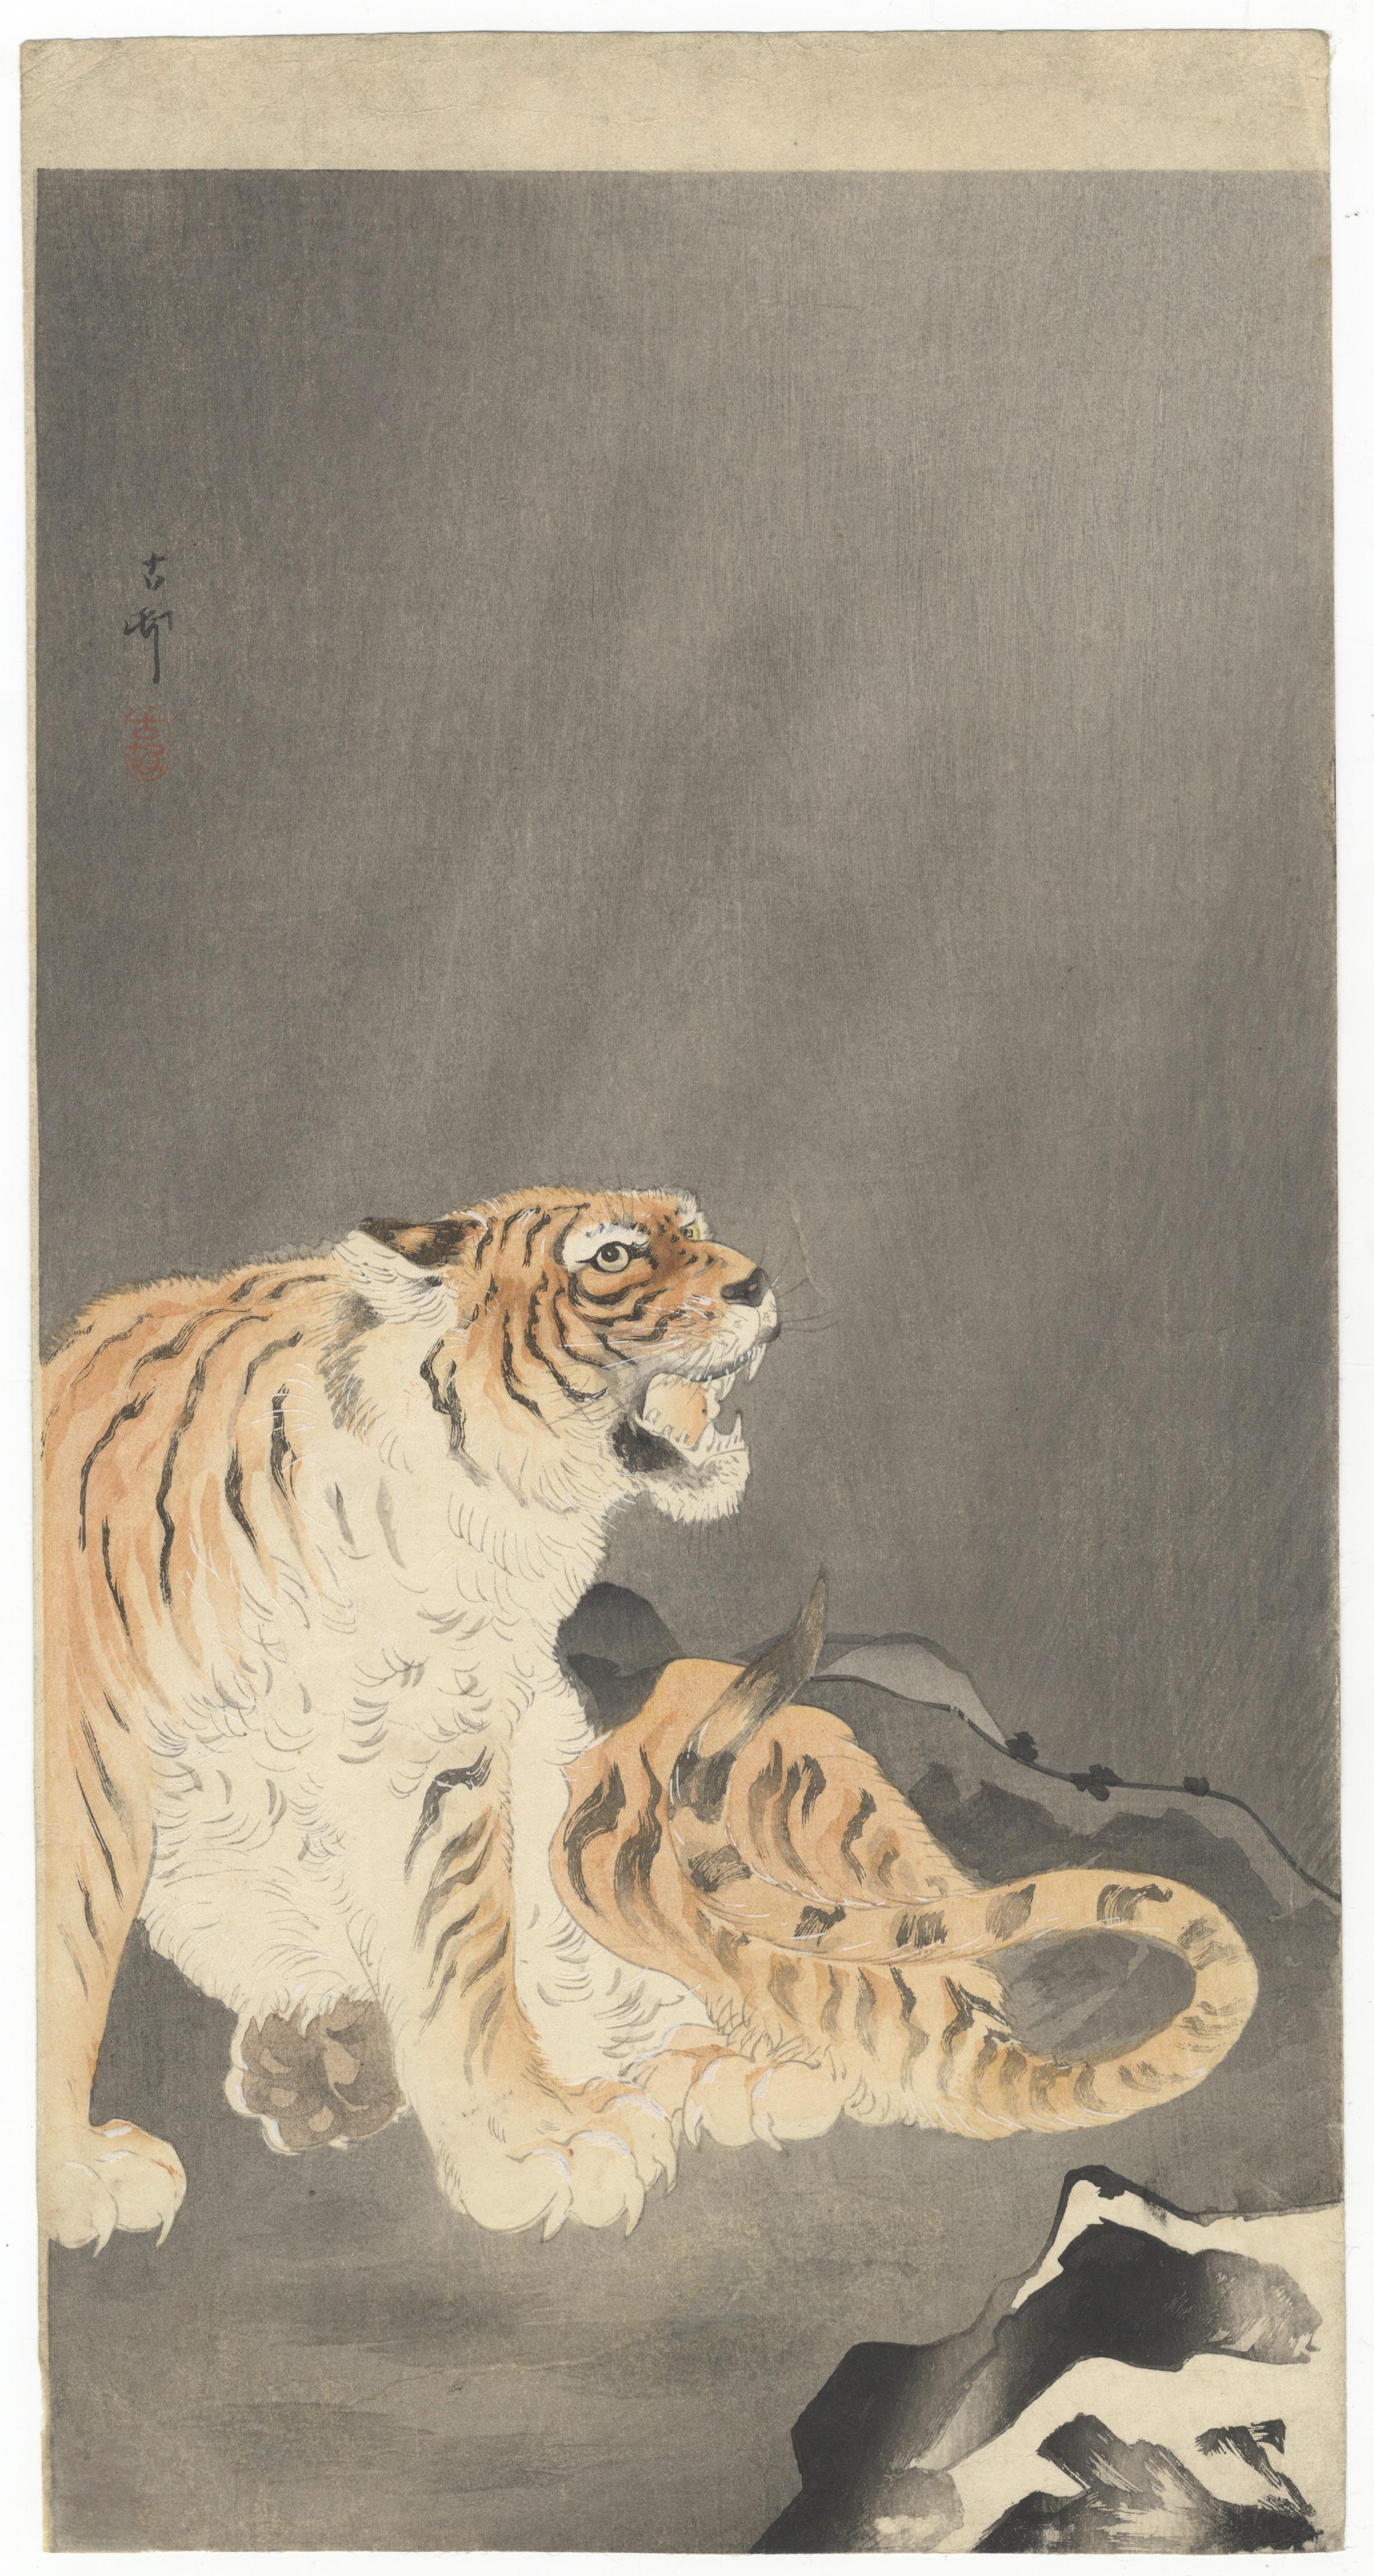 Ohara Koson Portrait Print - Koson Ohara, Shin-Hanga, Original Japanese Woodblock Print, Roaring Tiger